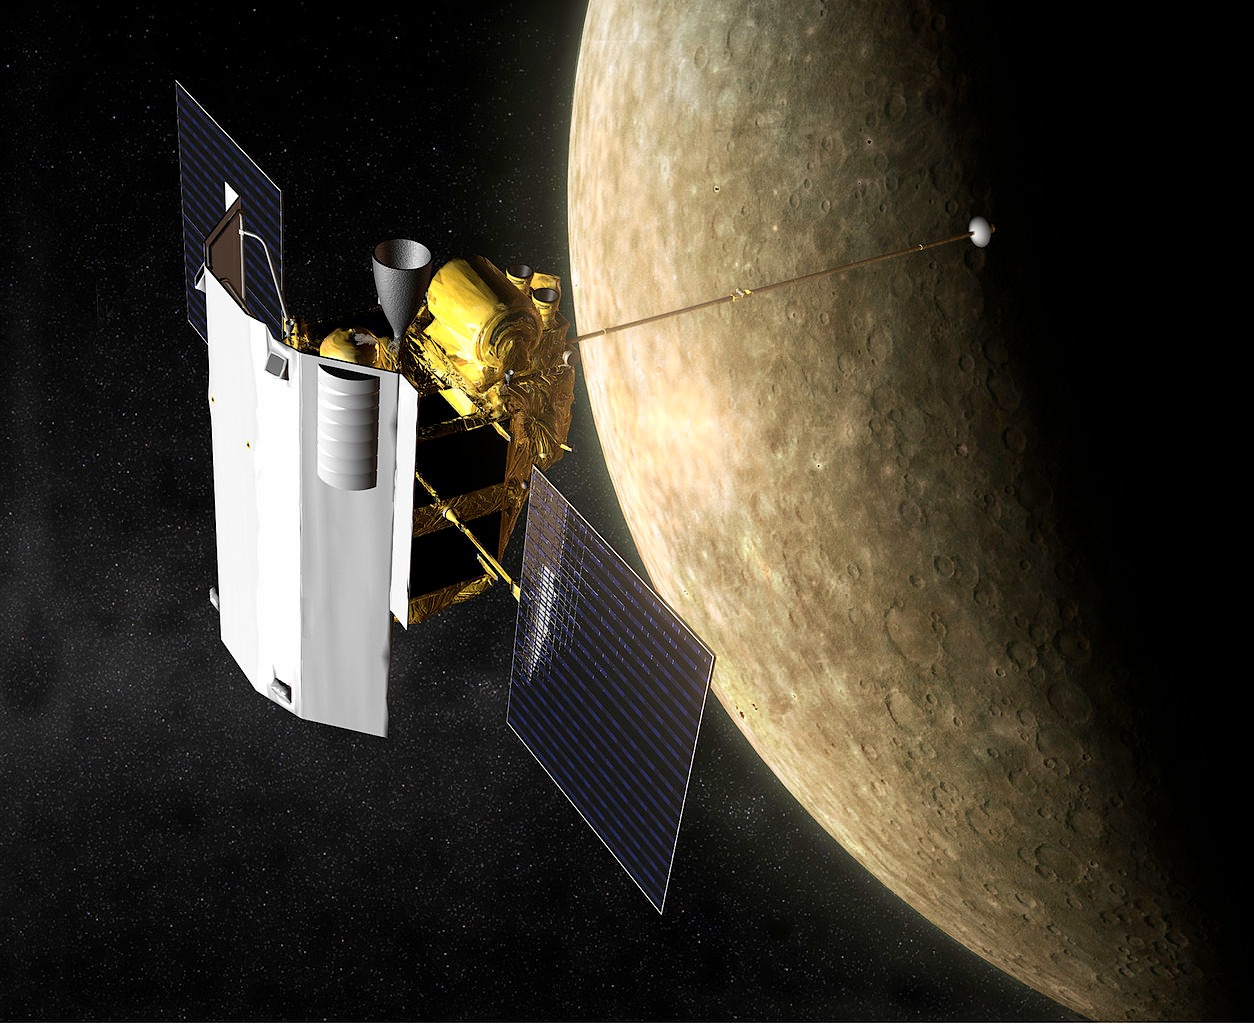 Umjetnicki prikas MESSENGER-a u orbiti Merkura (©NASA/JHU/APL).